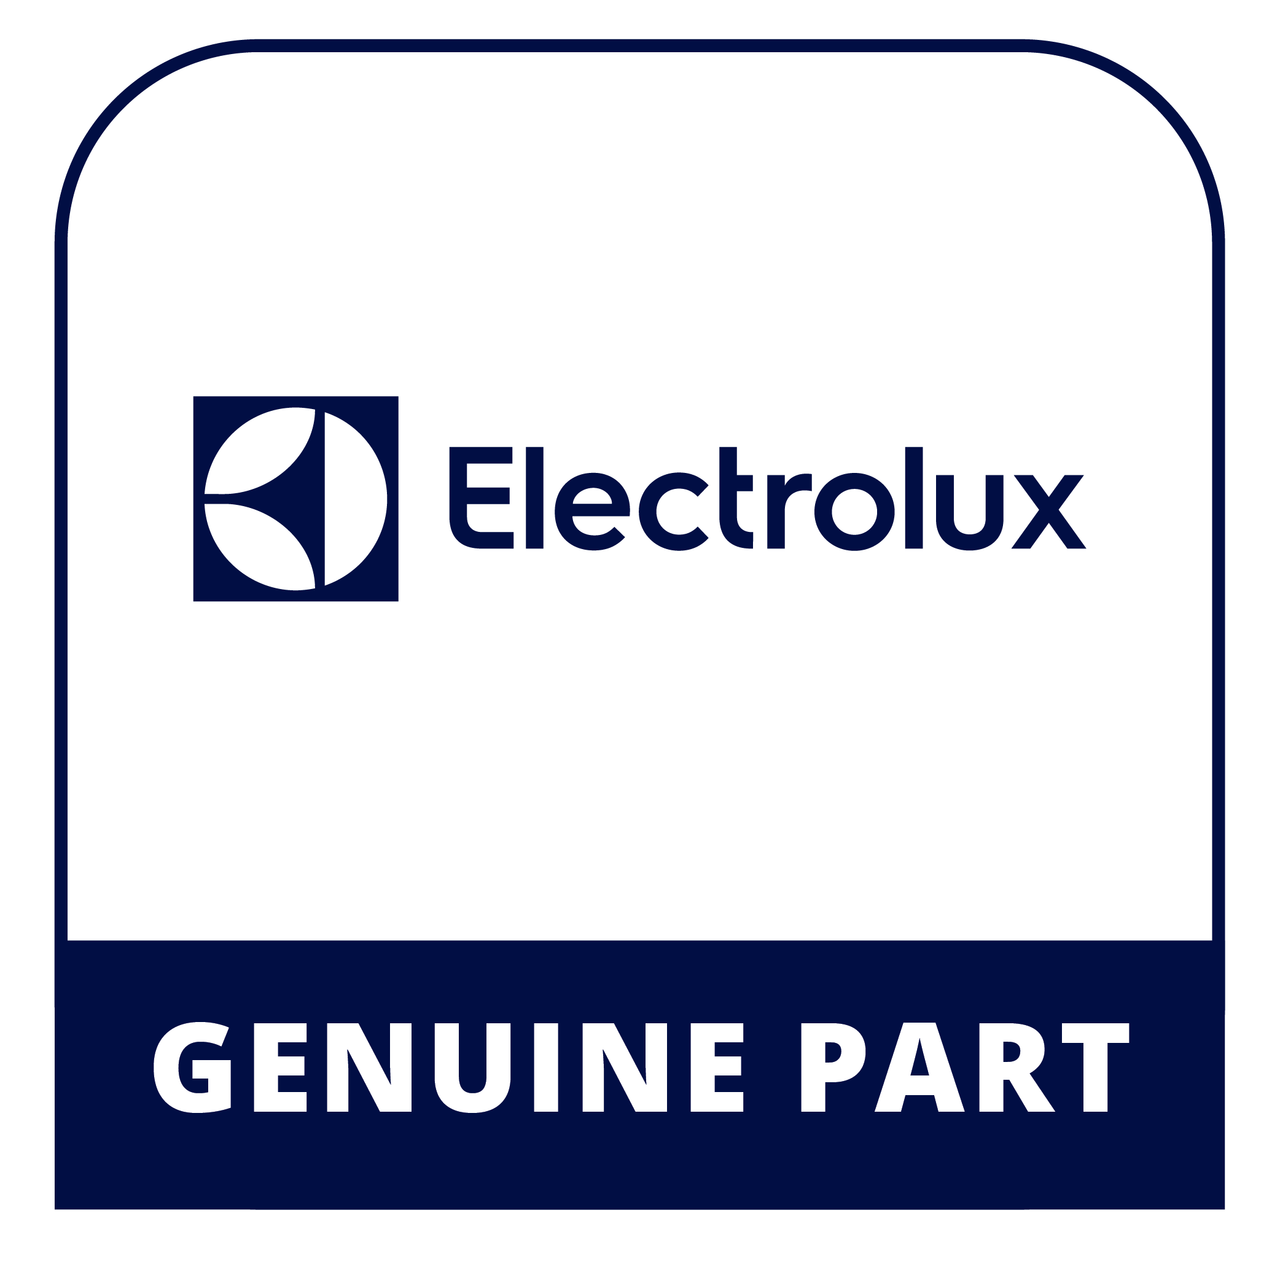 Frigidaire - Electrolux 318172904 Bracket - Genuine Electrolux Part